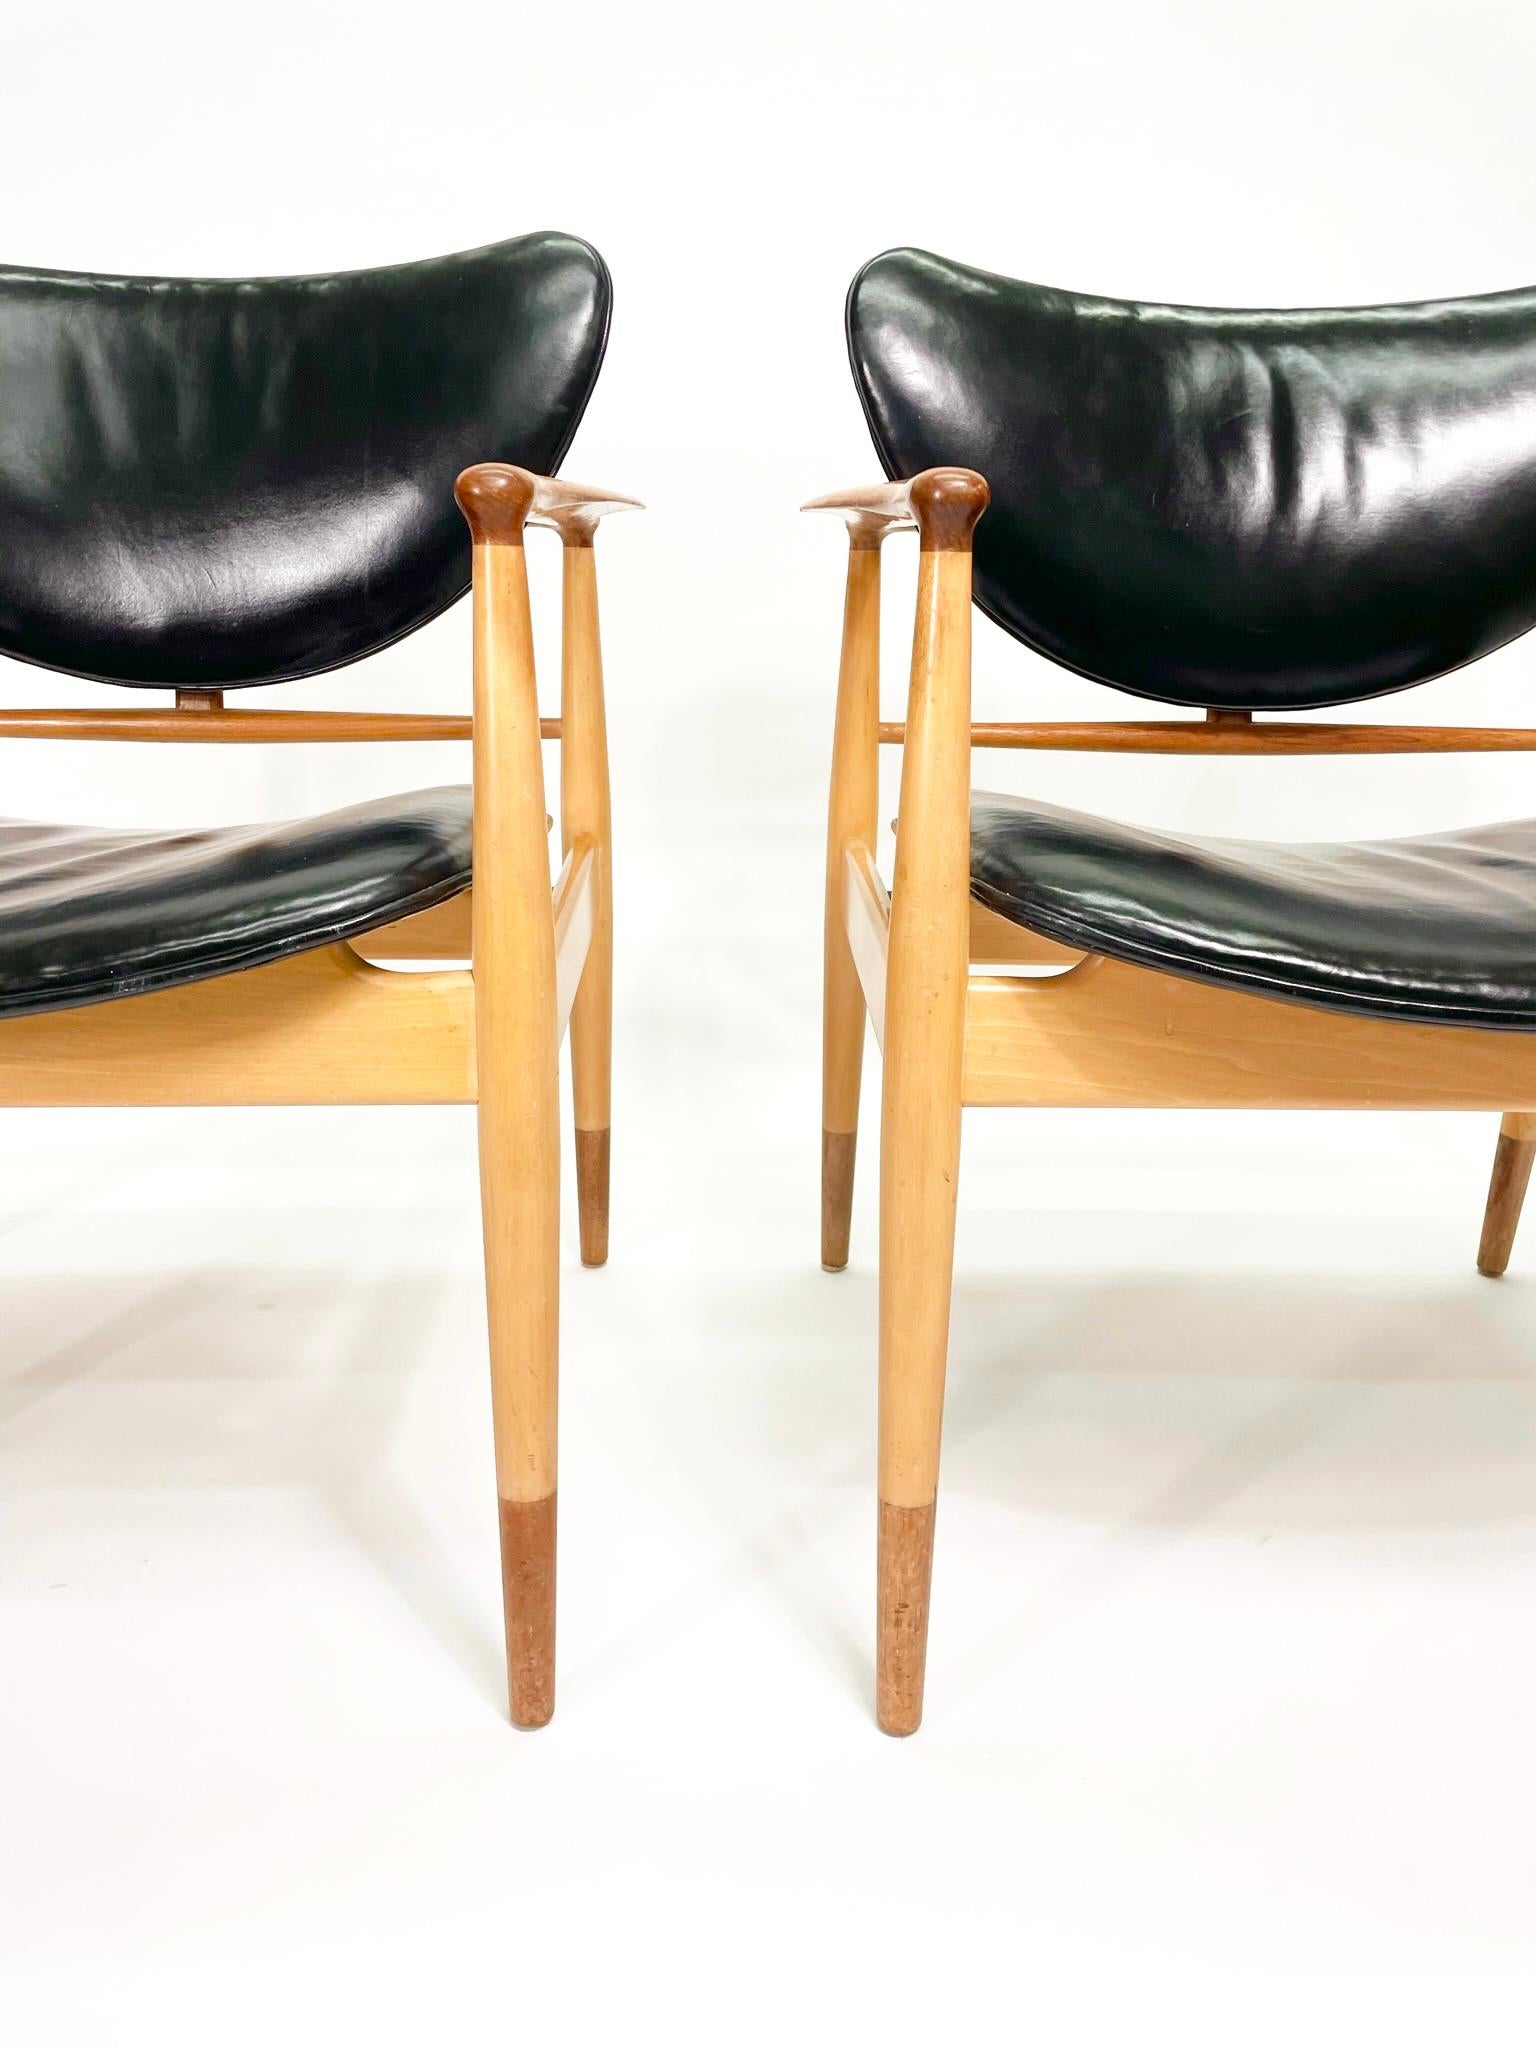 American Finn Juhl Model 48 Chair by Baker, in Teak and Maple (2 available)